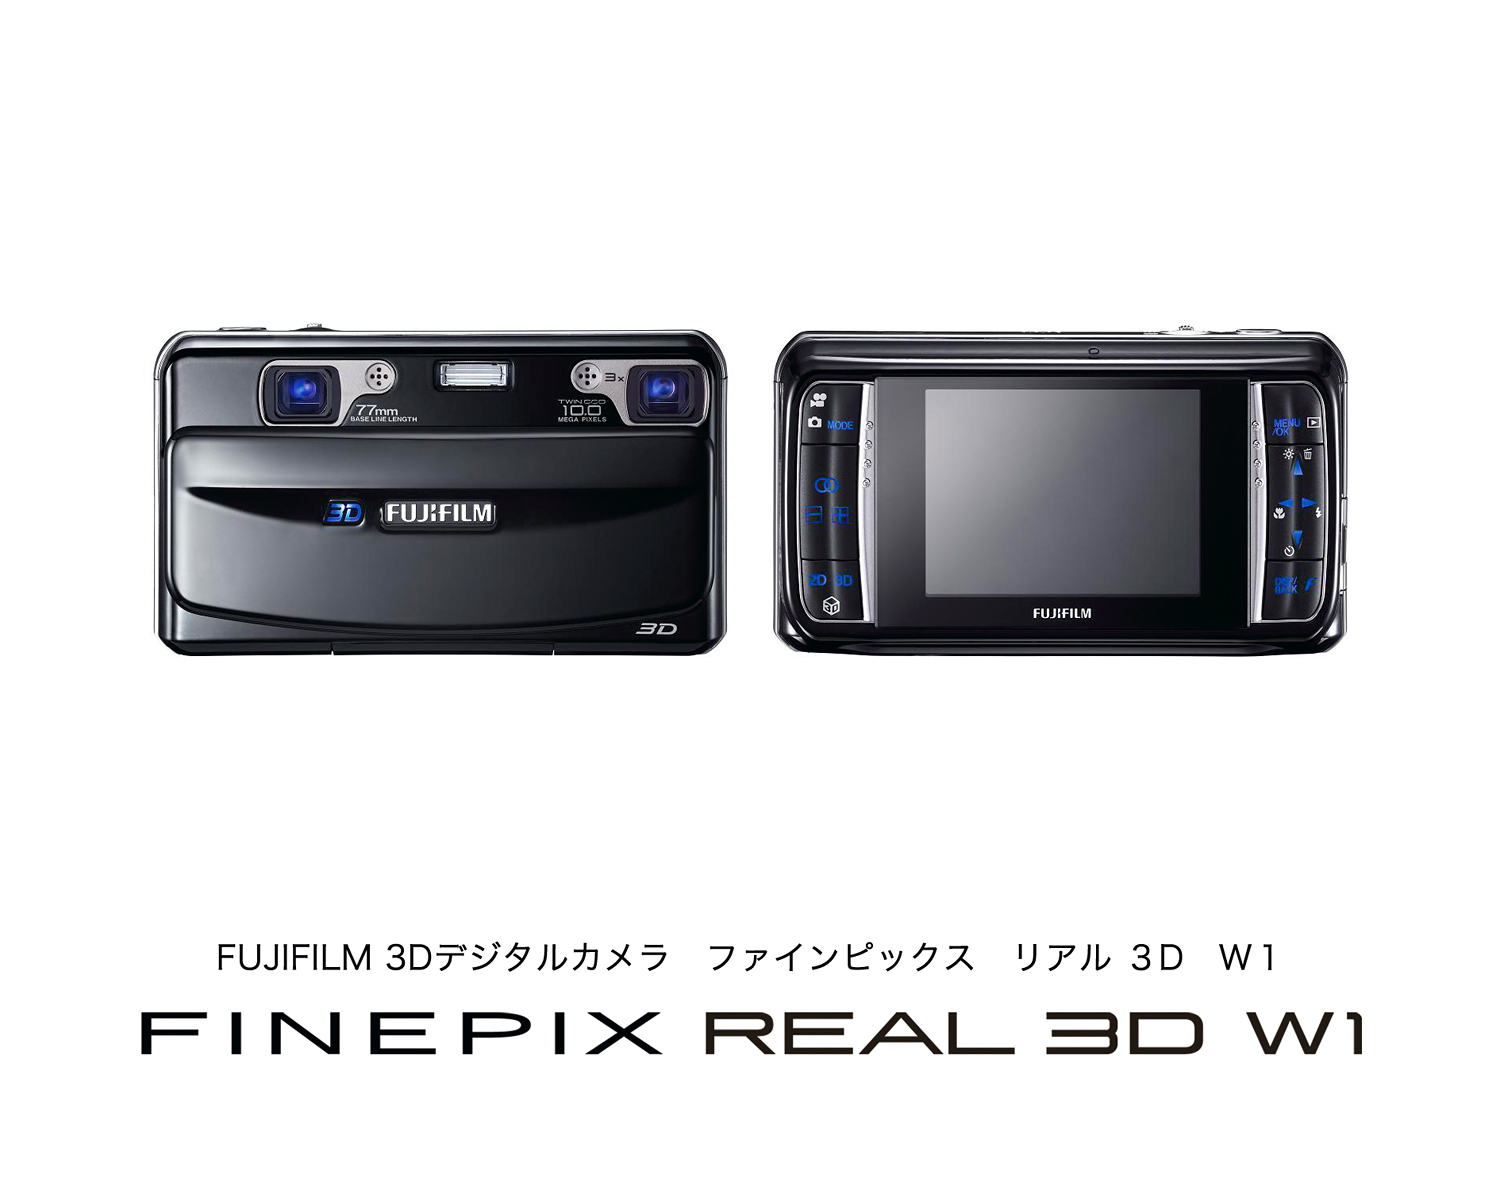 ３Ｄ映像が簡単に撮影できる3Dデジタル映像システム「FUJIFILM FinePix